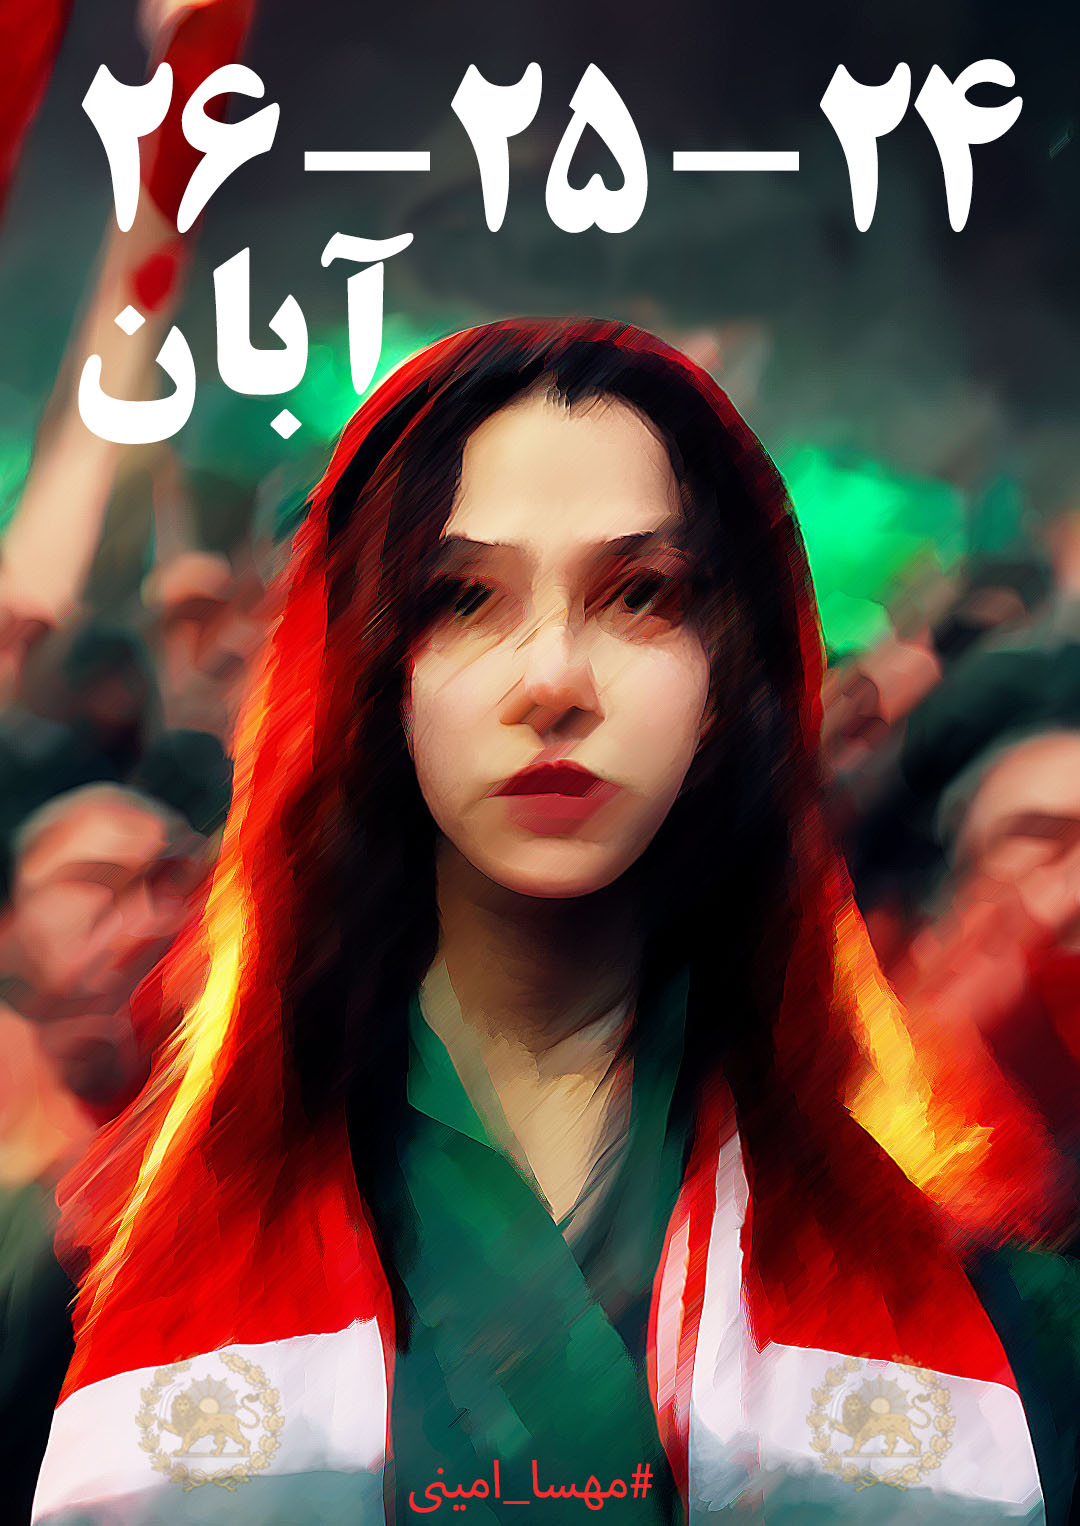 Iran Revolution Art No. Fhf_KomXwAAn7w_